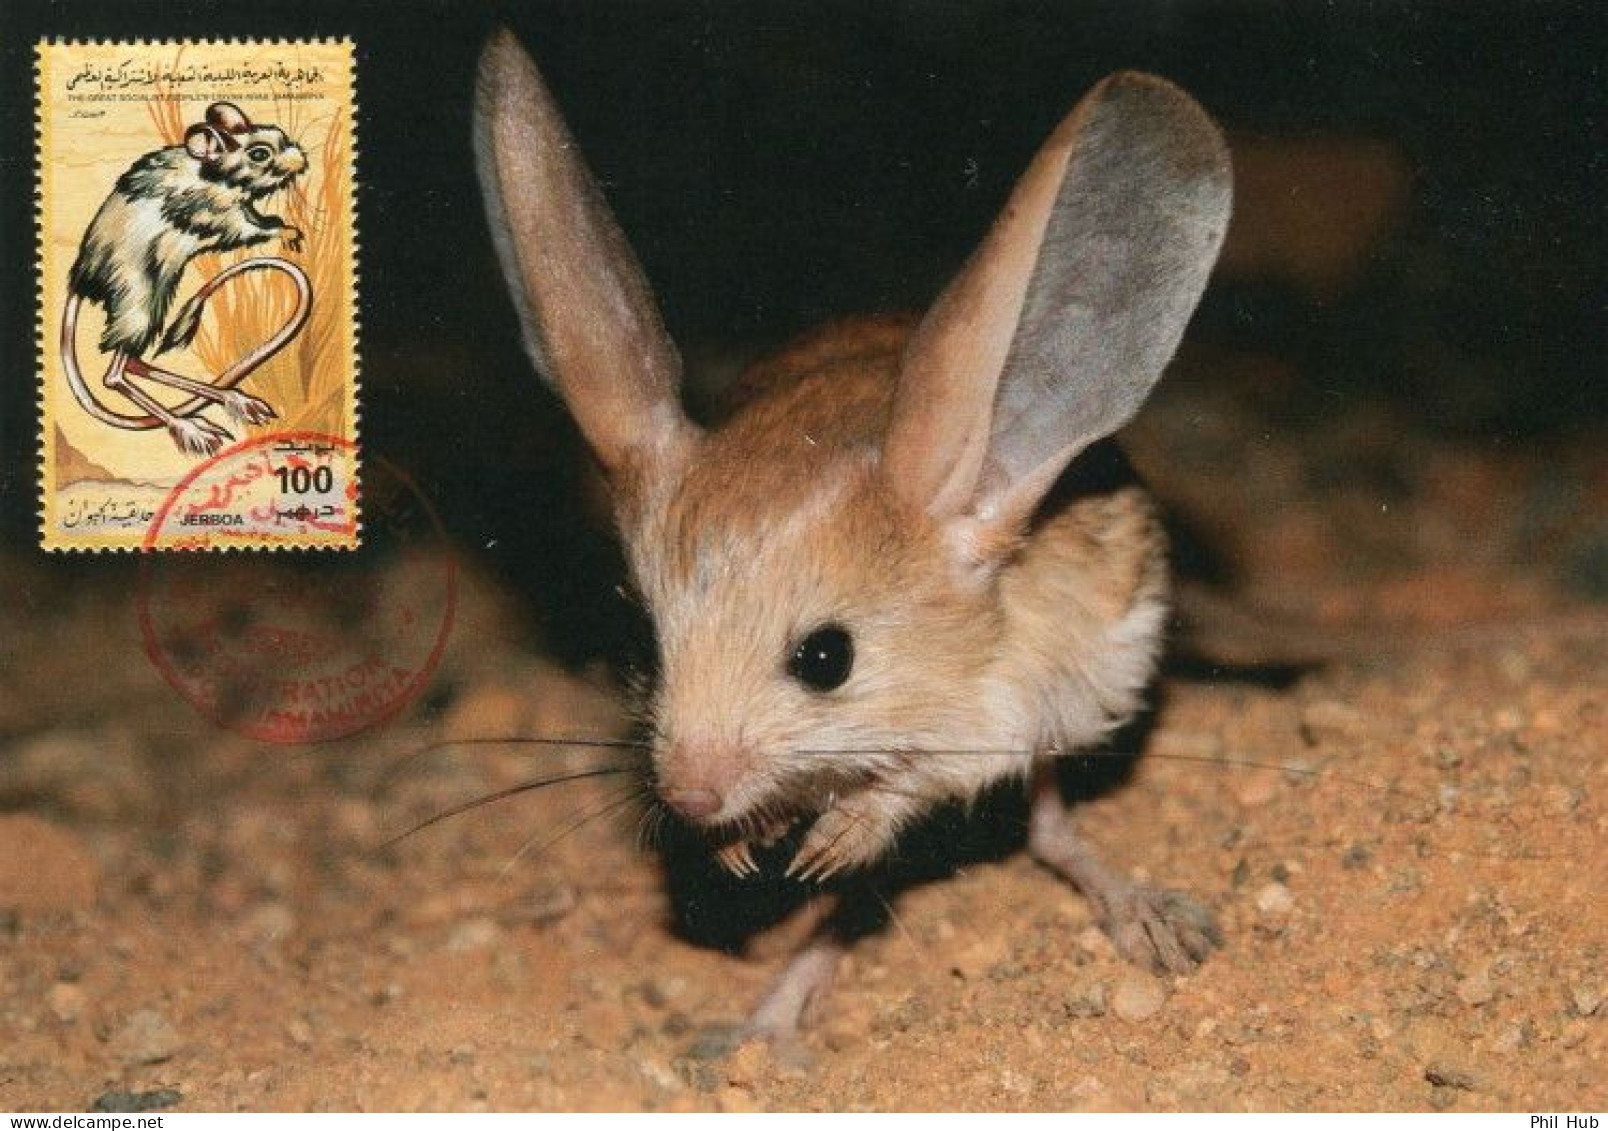 LIBYA 1995 Libyan Zoo Wildlife "Jerboa" (maximum-card) #16 - Rodents